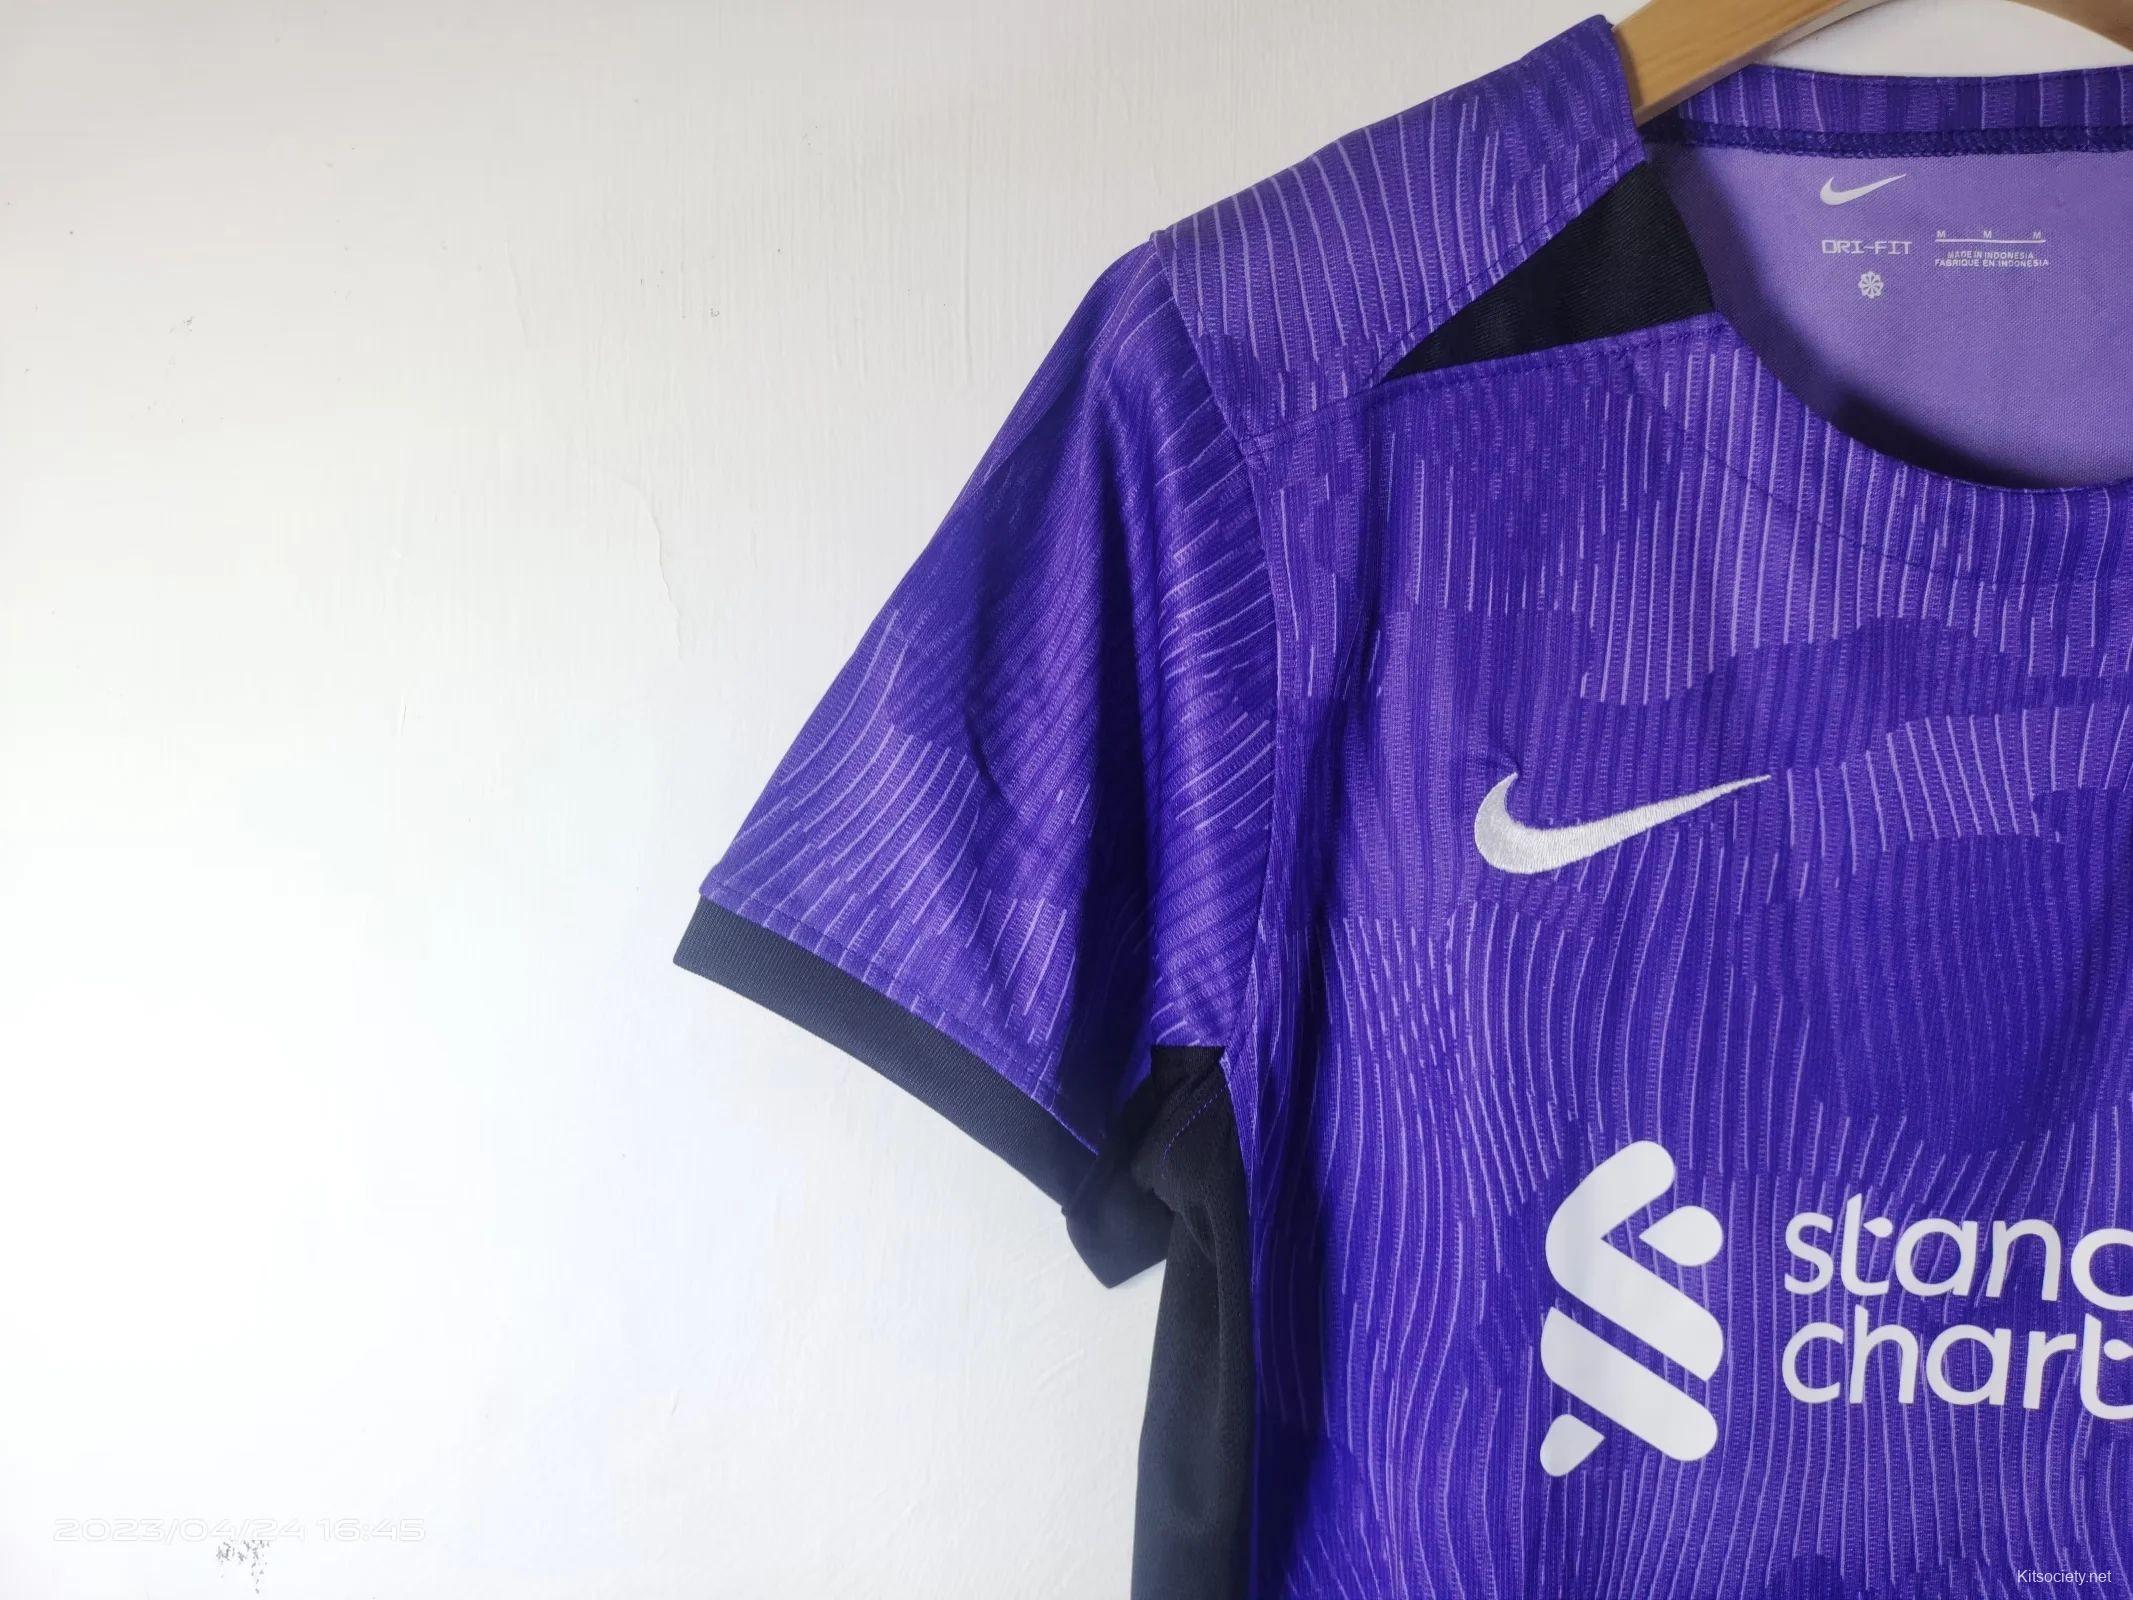 purple liverpool jersey